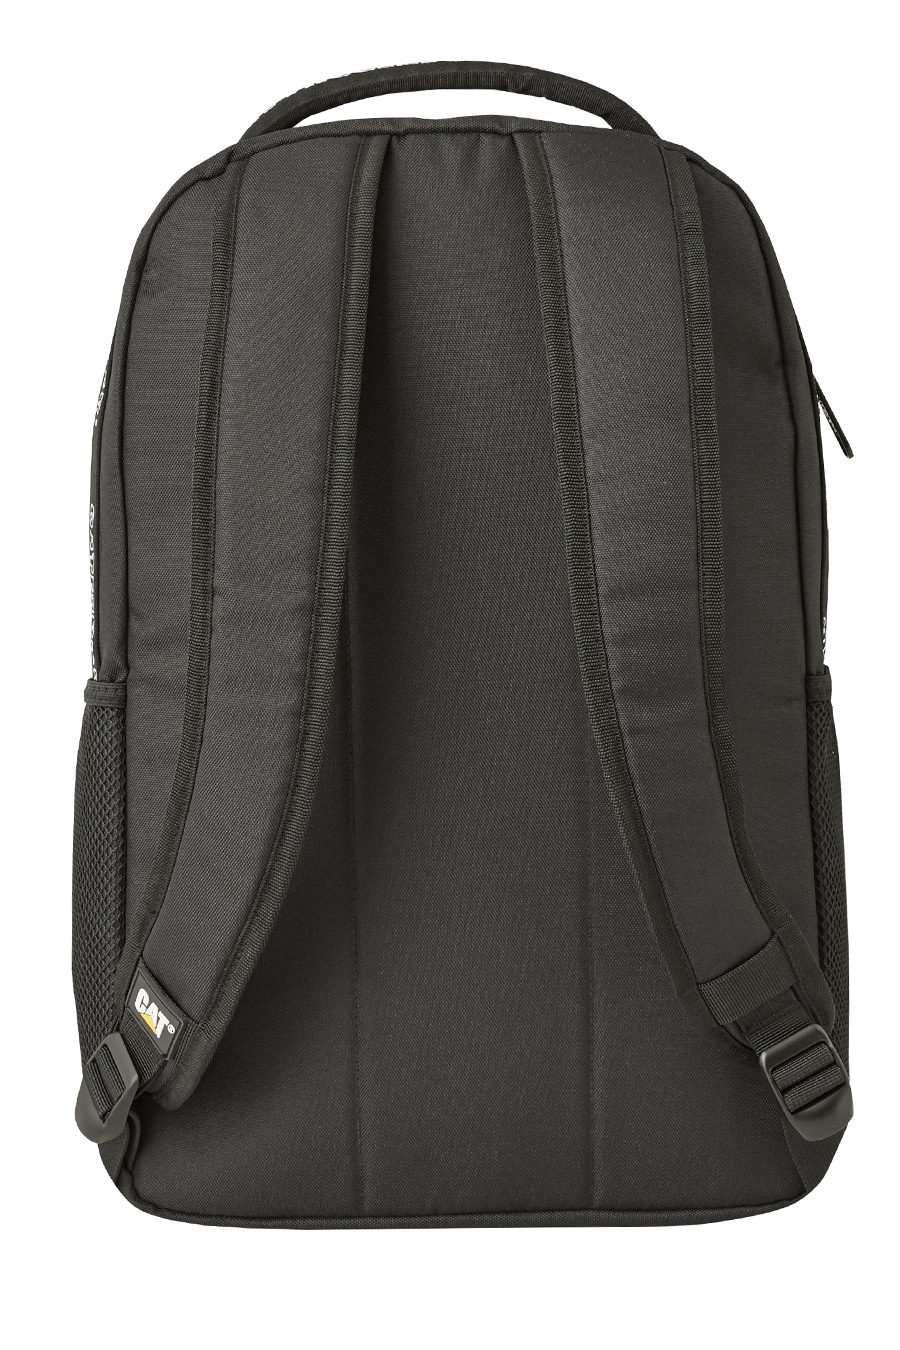 Backpack CAT 84353-01